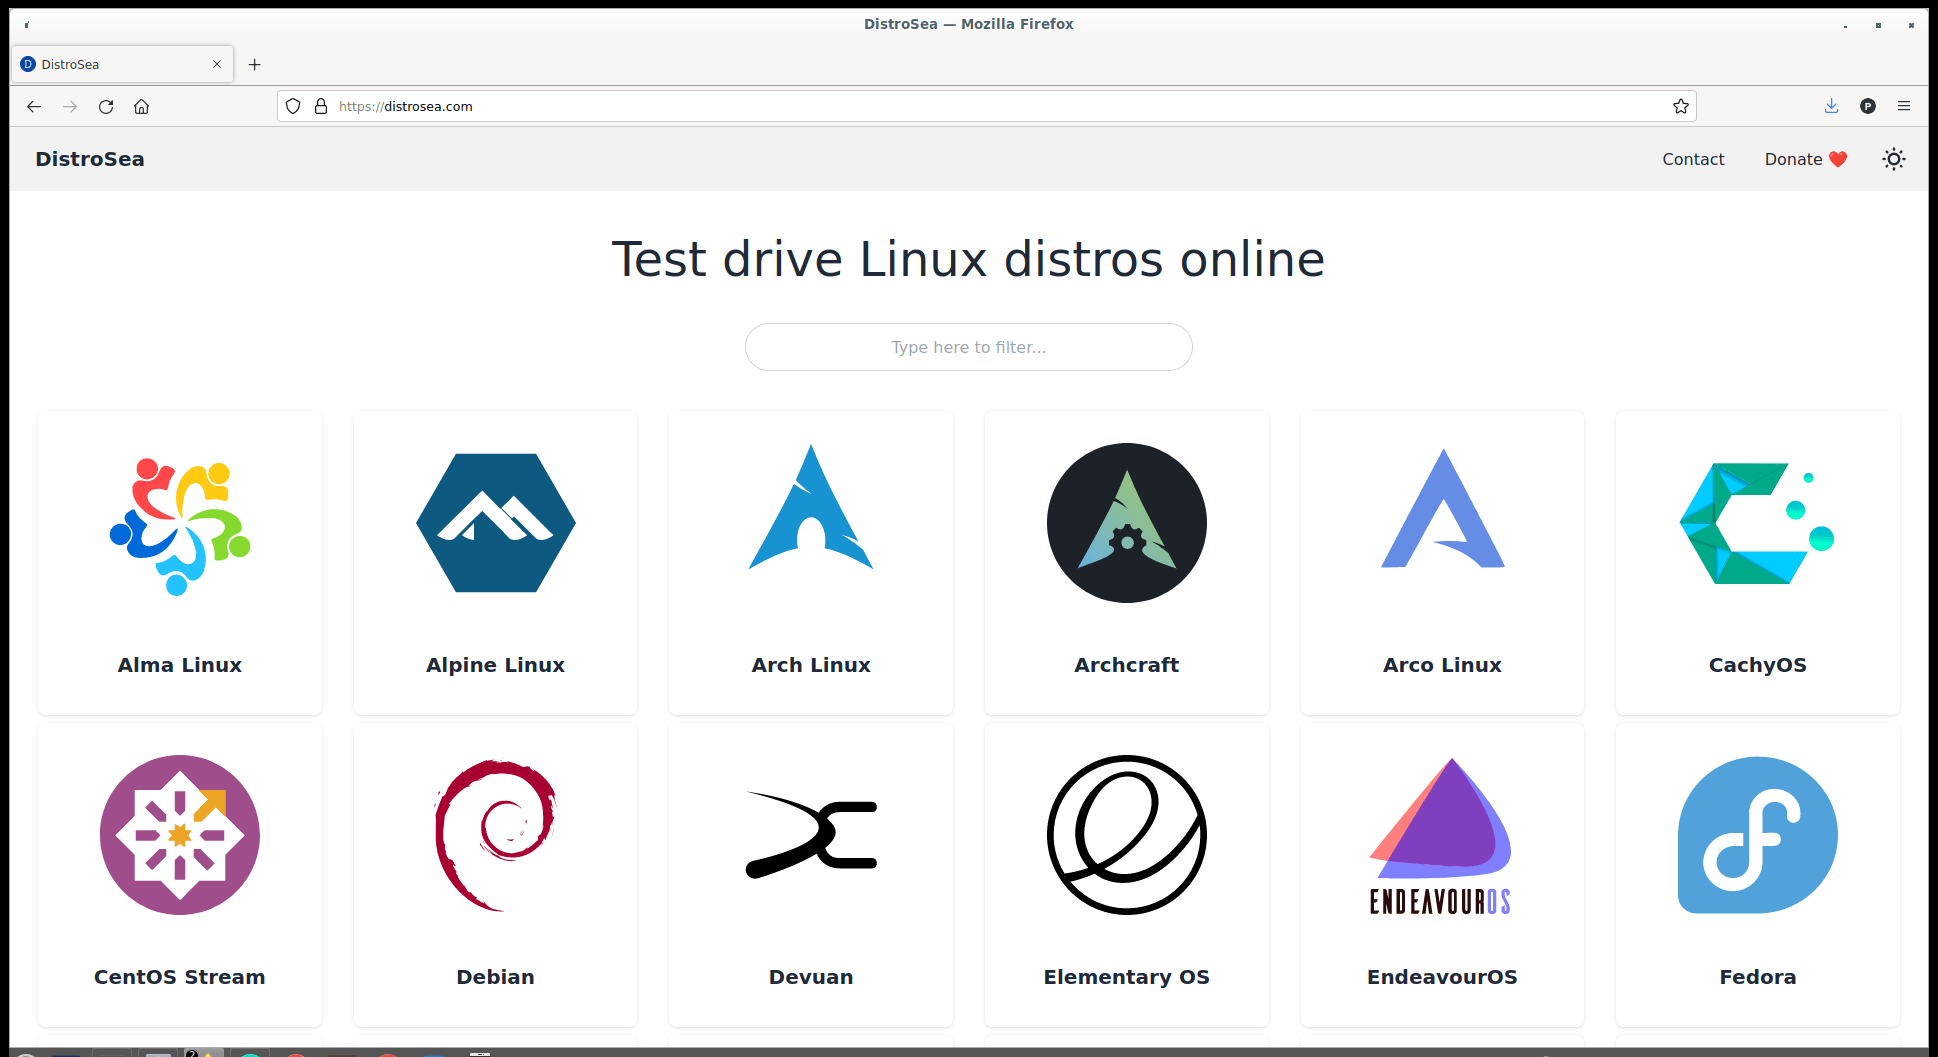 DistroSea - Test drive Linux distros online